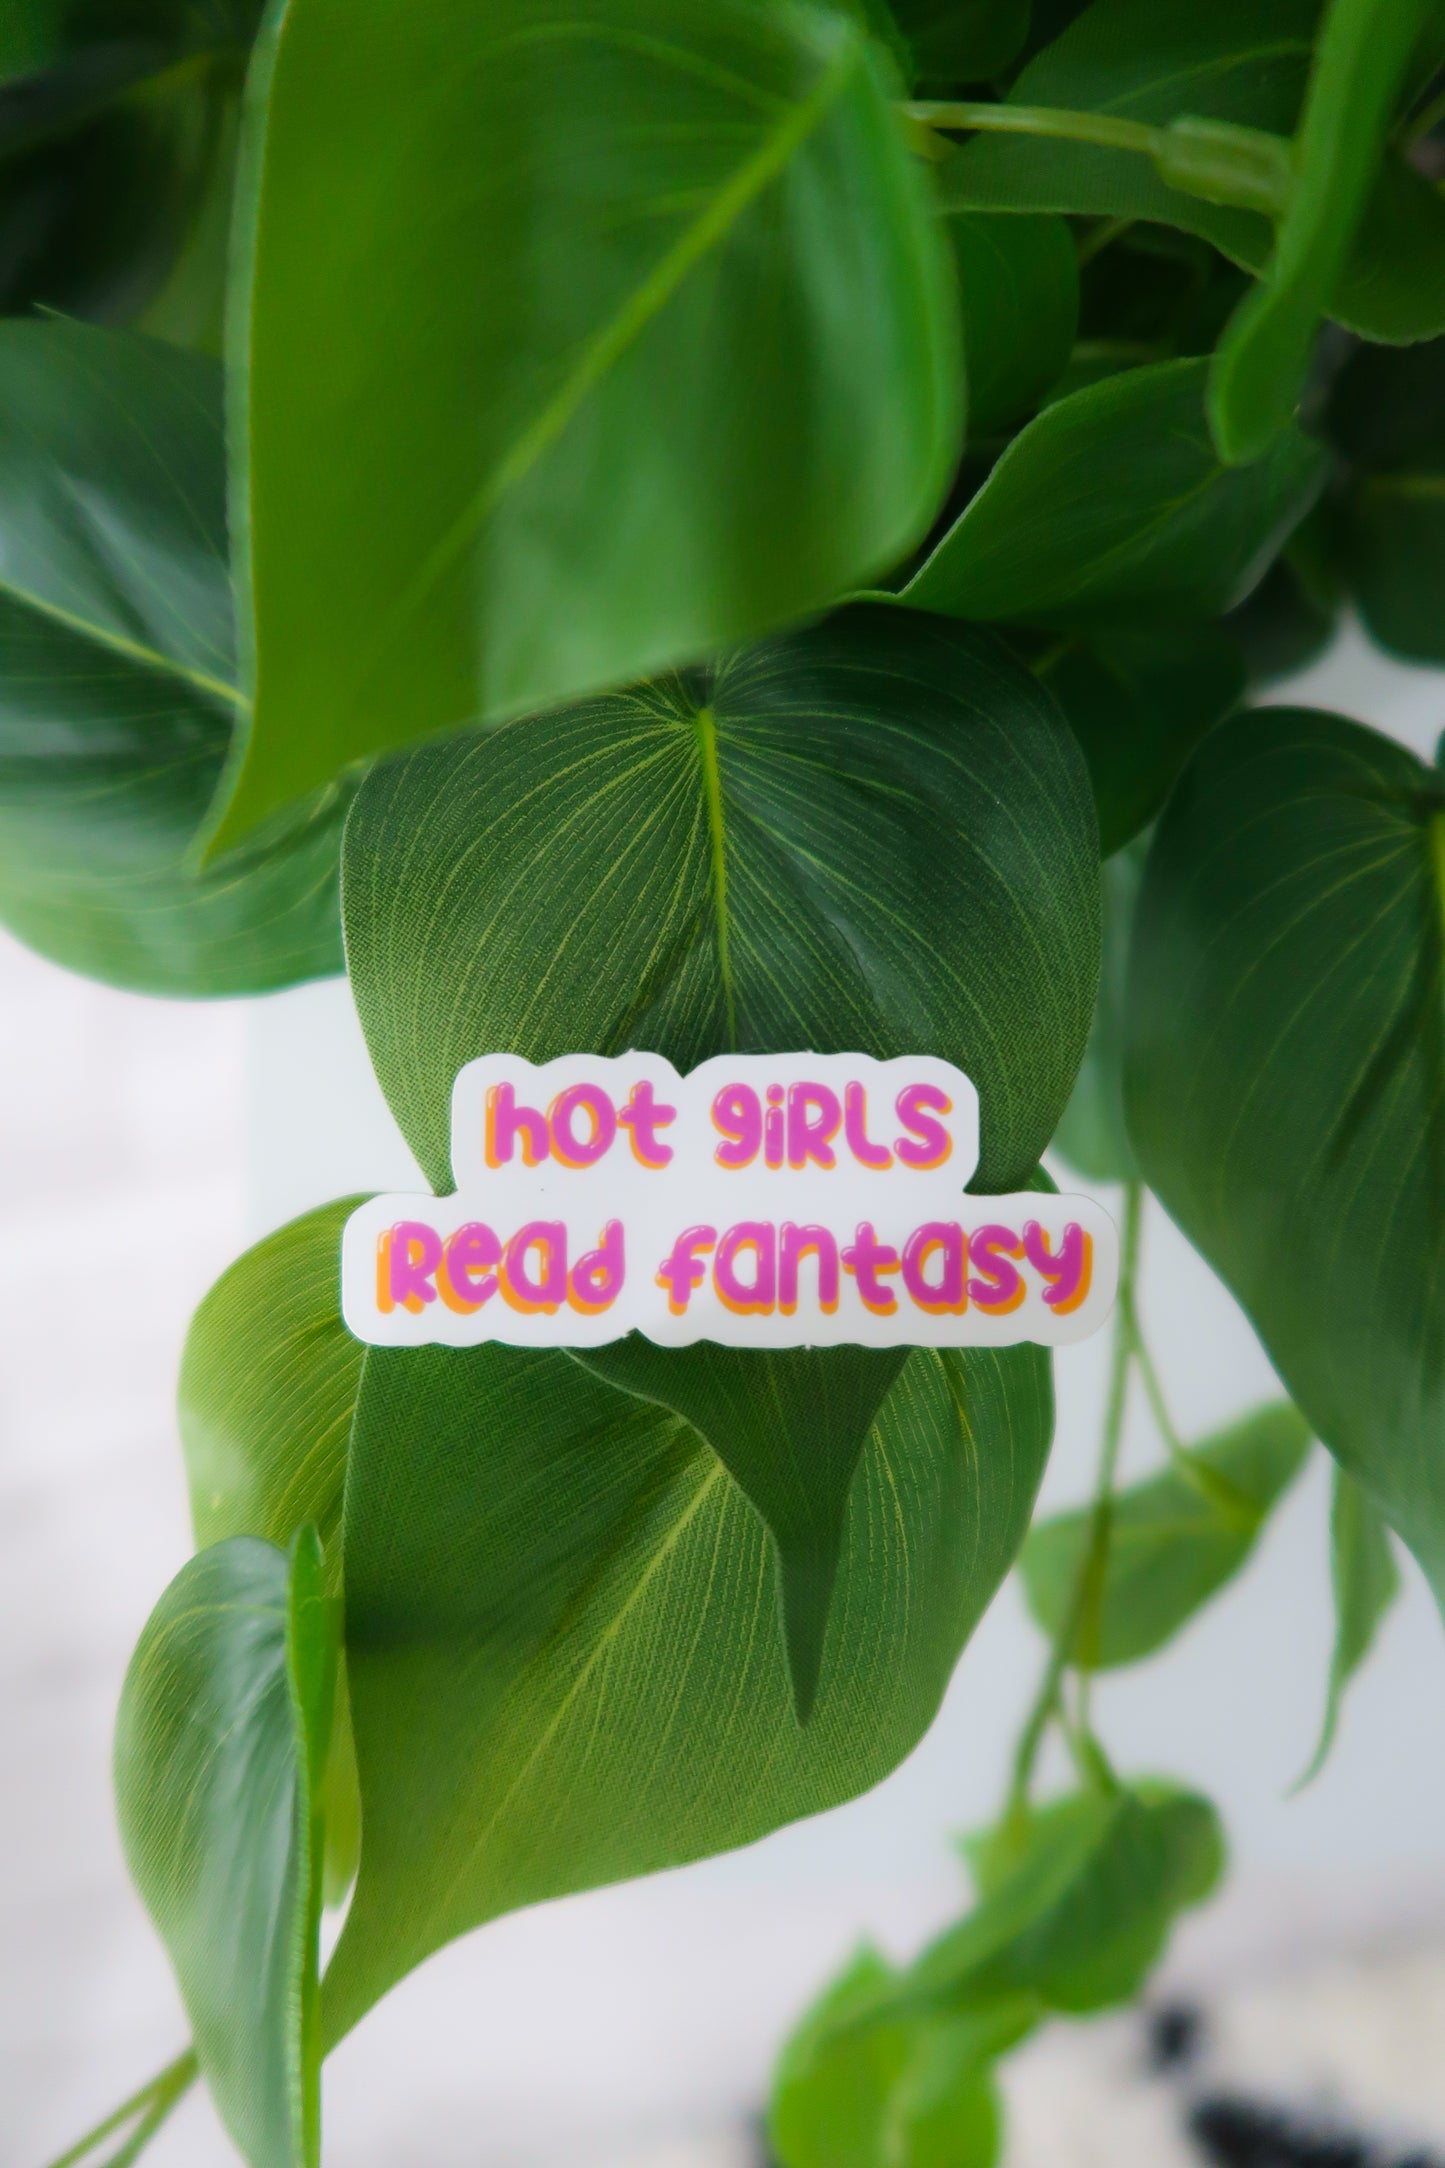 Hot Girls Read Fantasy Sticker